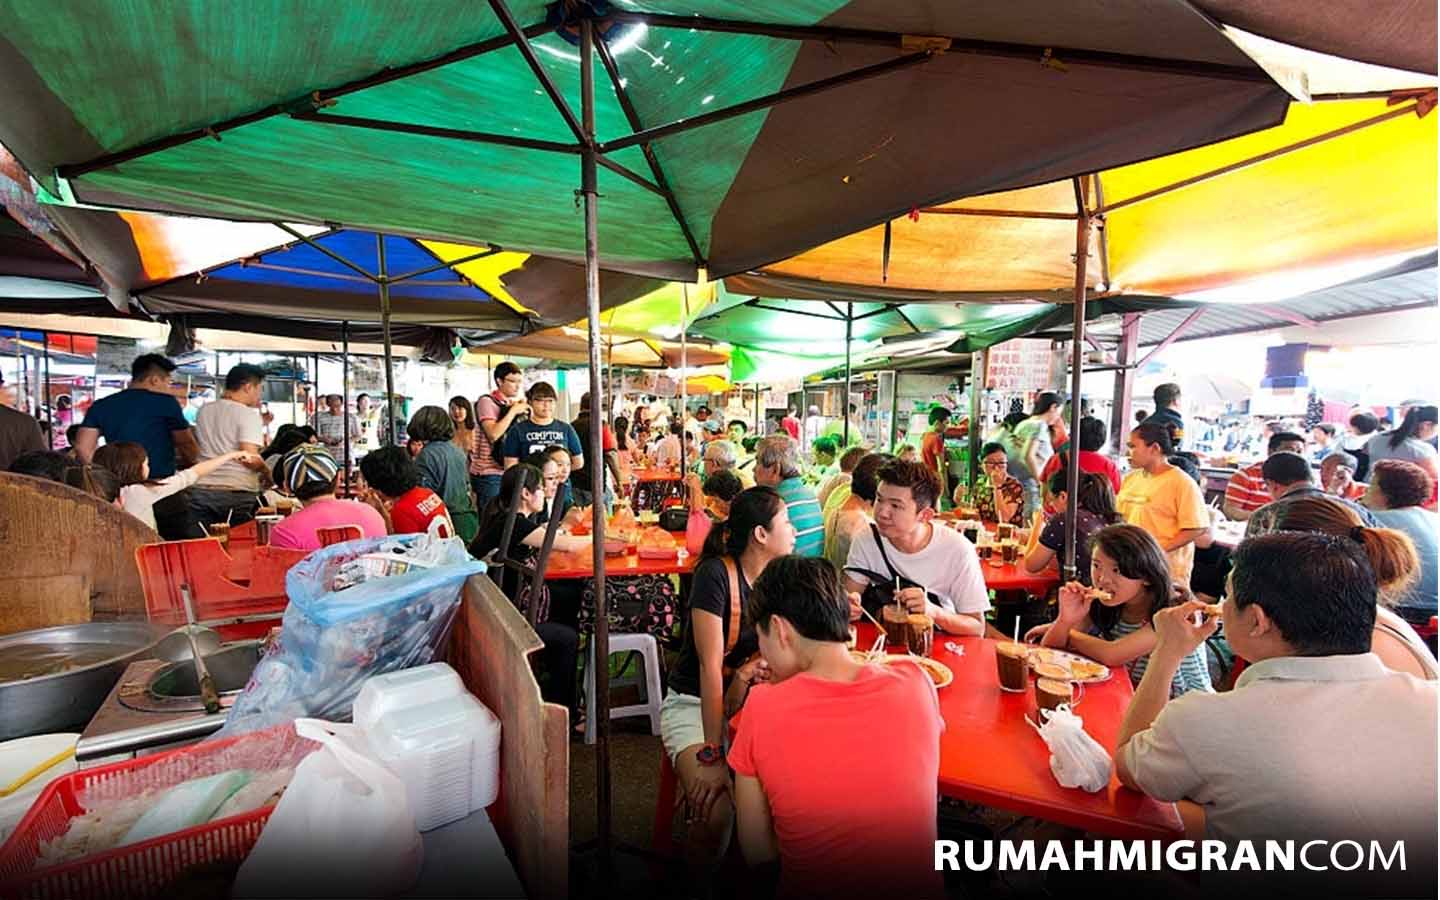 Restoran Indonesia Di Malaysia Yang Ramai - RumahMigran.com